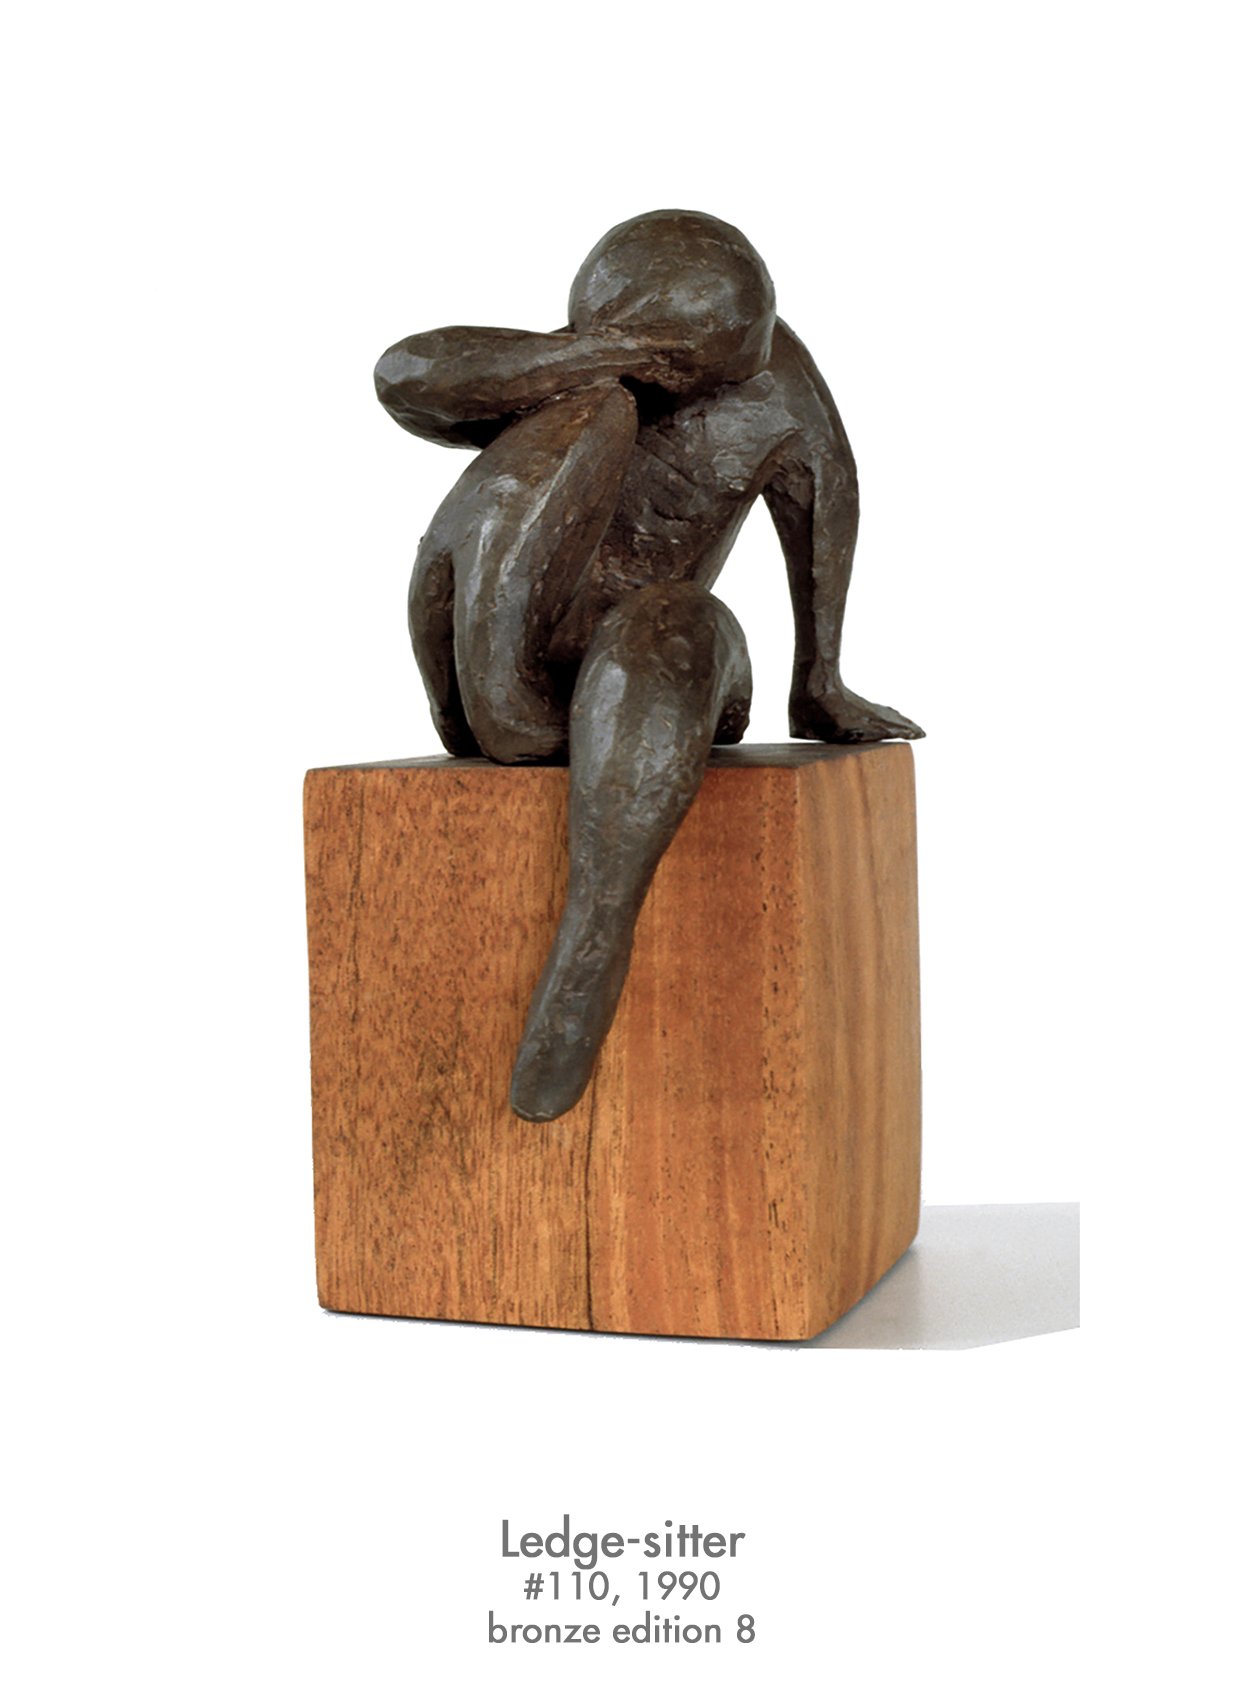 Ledge-sitter, 1990, bronze, #110